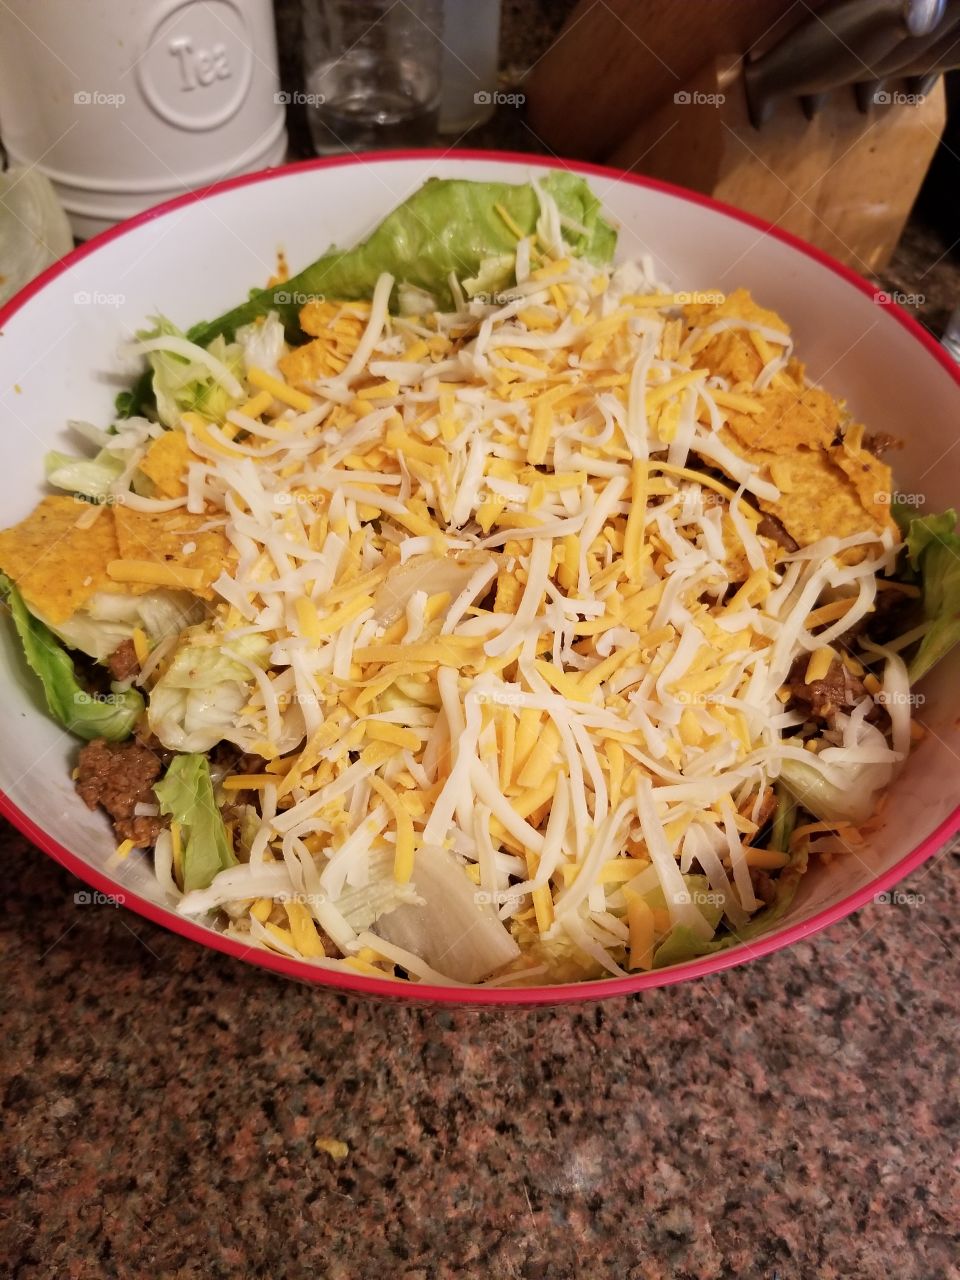 fabulous Taco salad